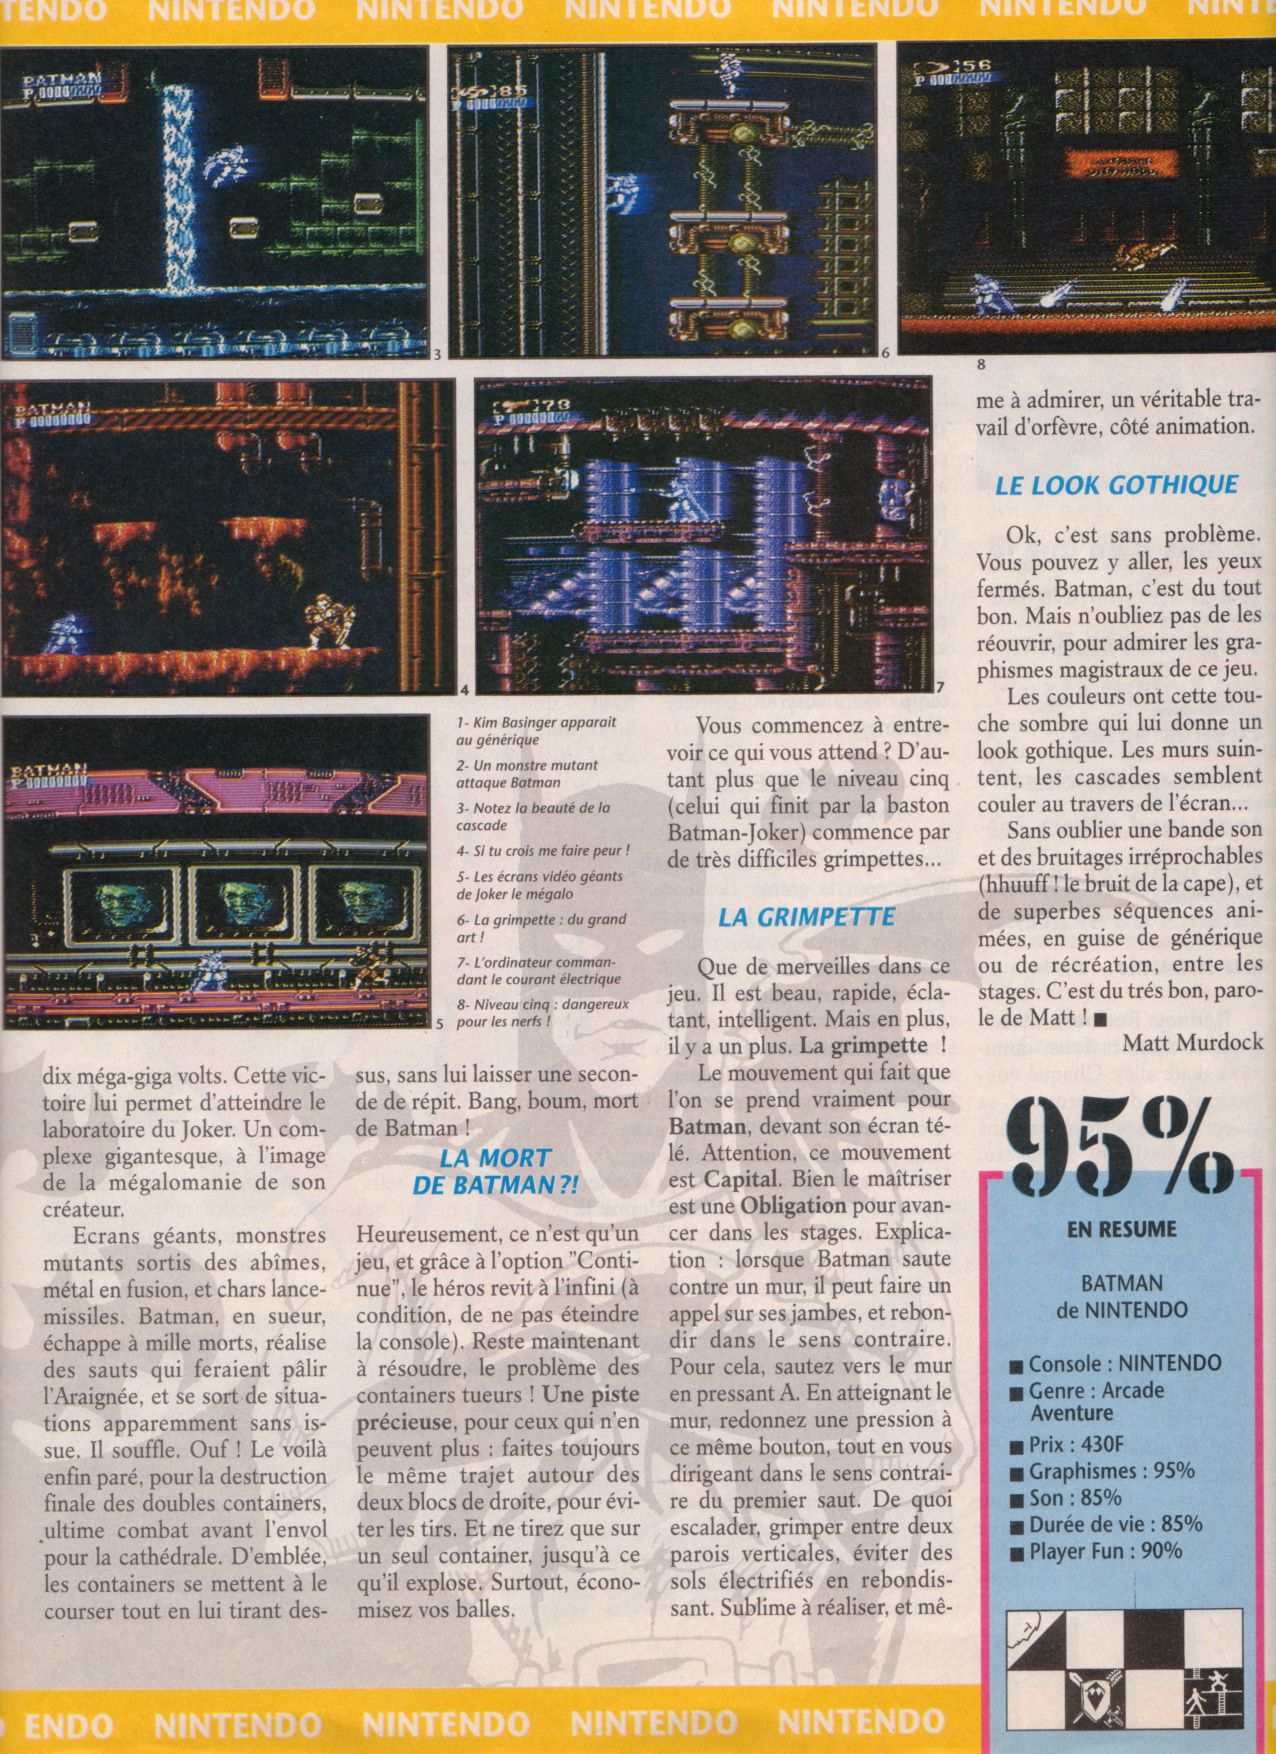 [TEST] Batman (Famicom) Player%20One%20002%20-%20Page%20029%20%281990-10%29